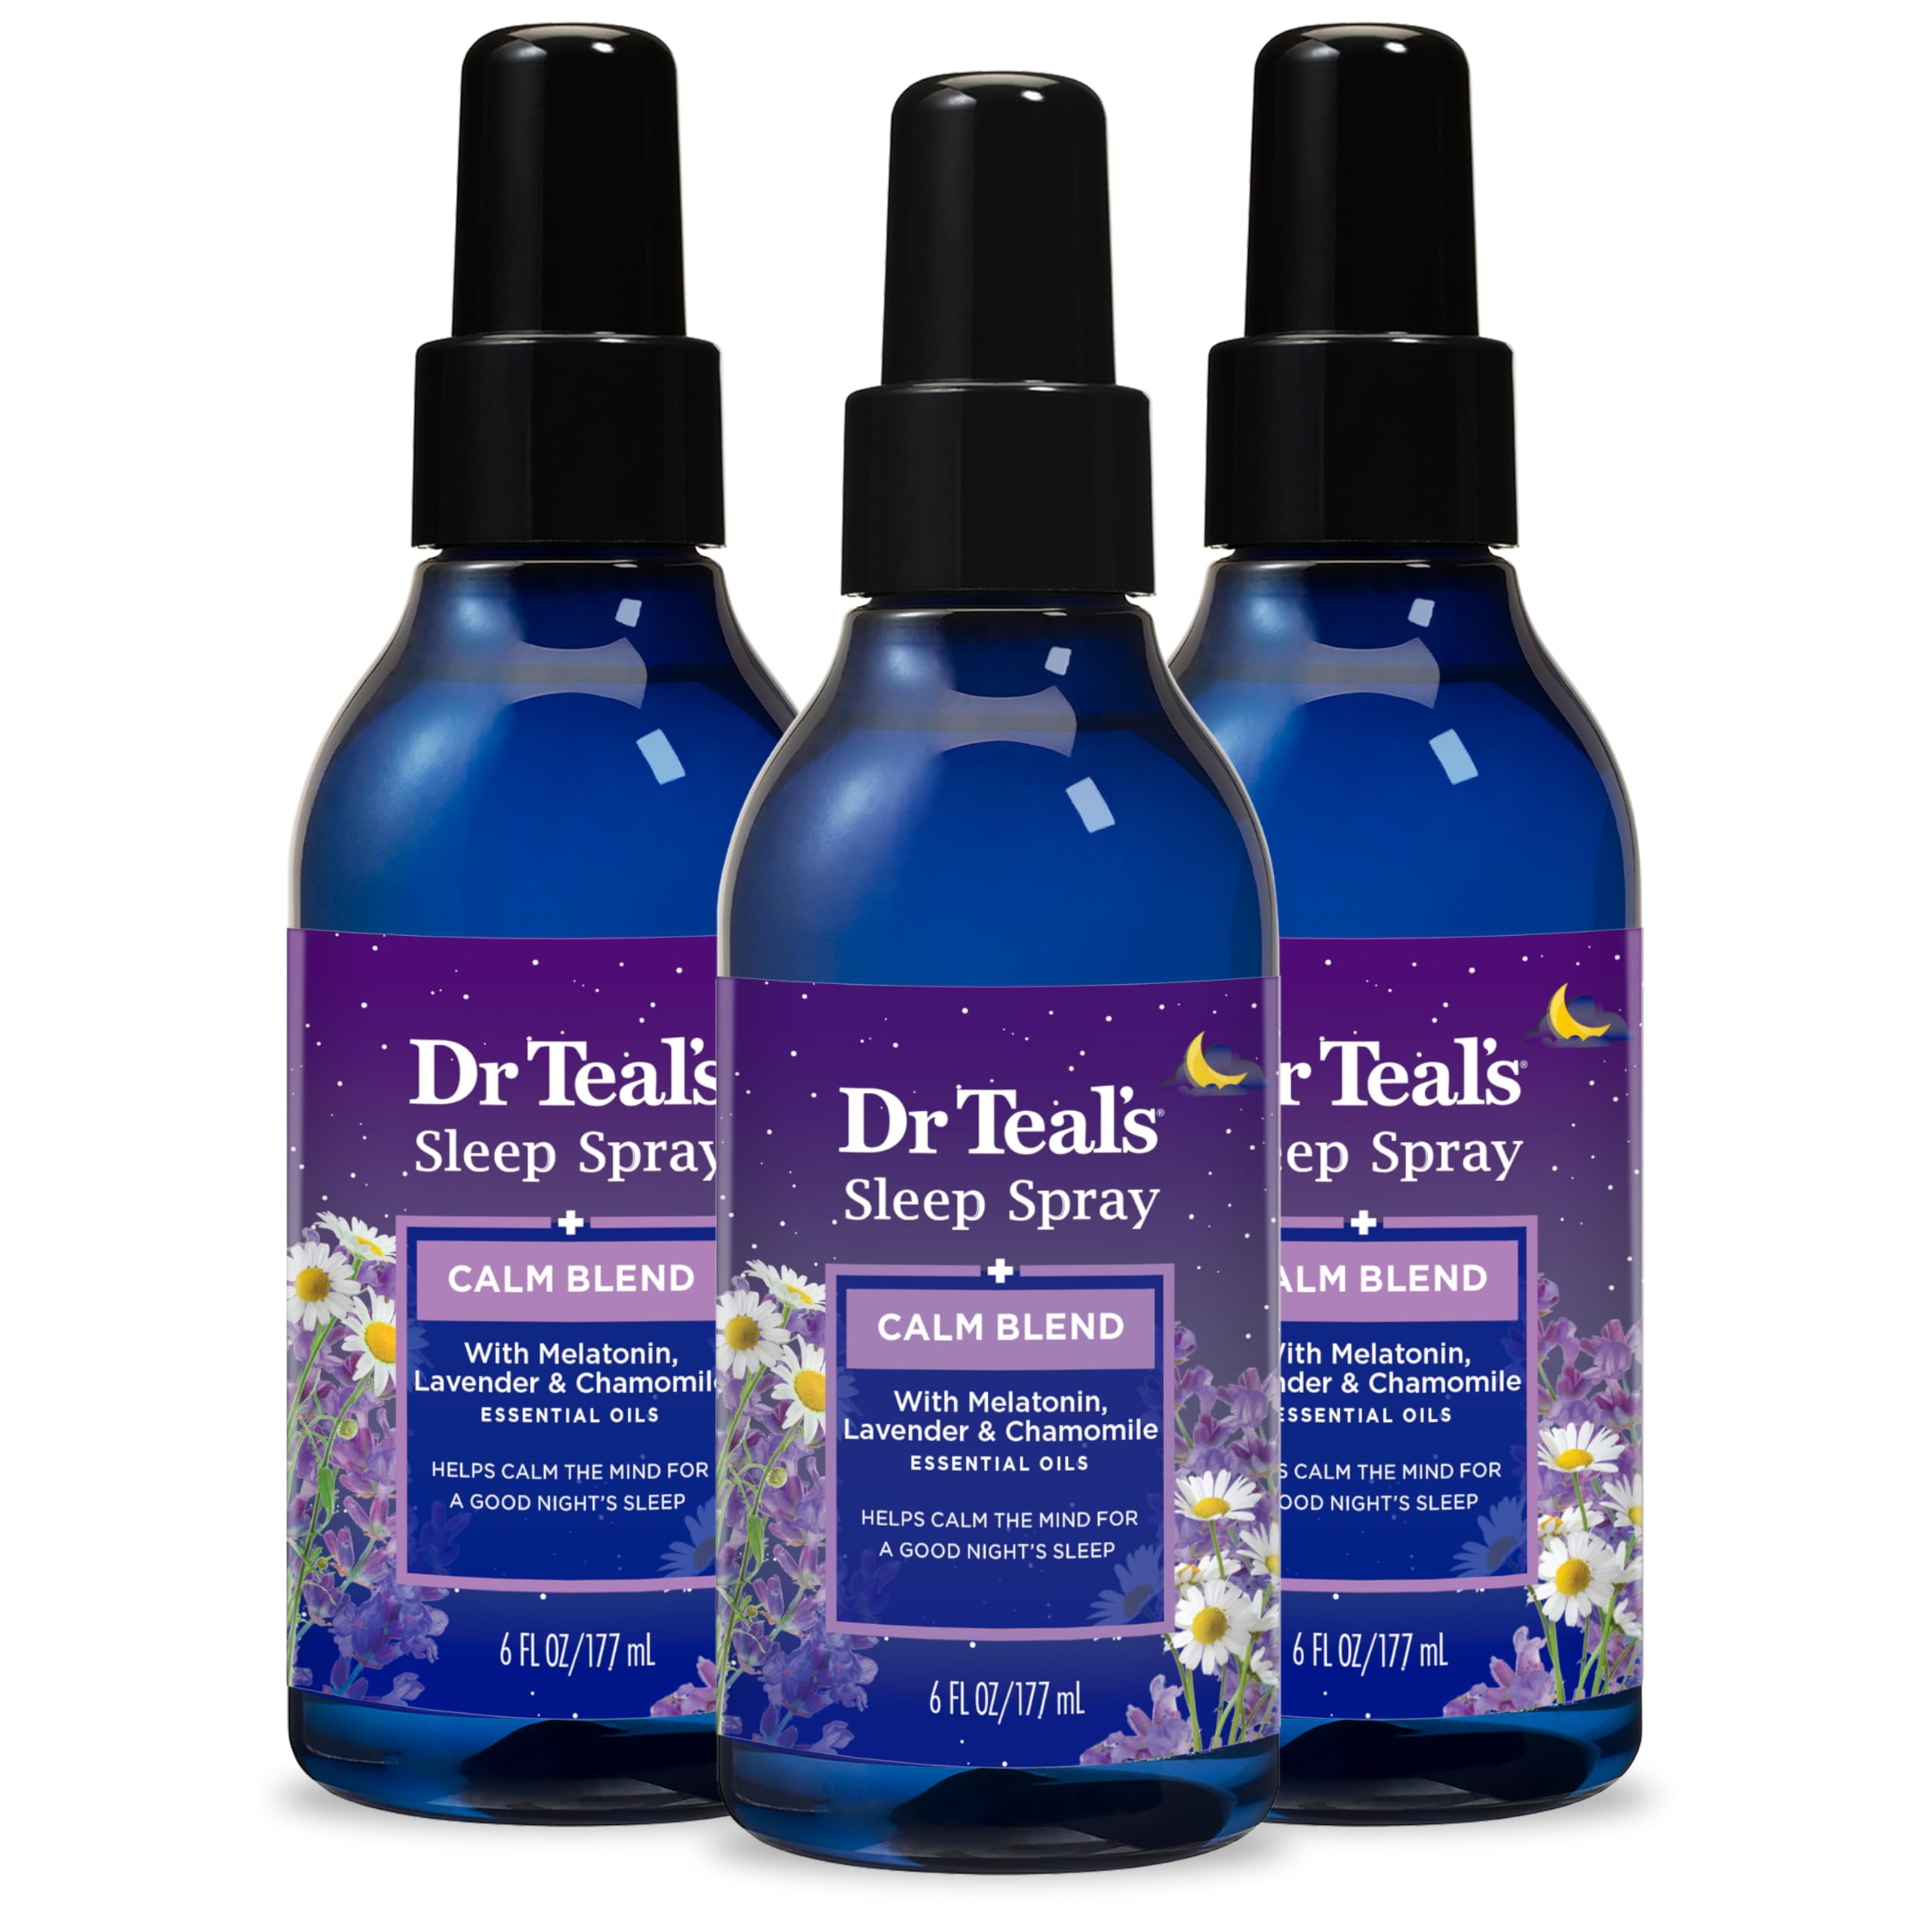 $12.33 /w S&S: Dr Teal's Sleep Spray with Melatonin & Essential Oil Blend, 6 fl oz (Pack of 3)